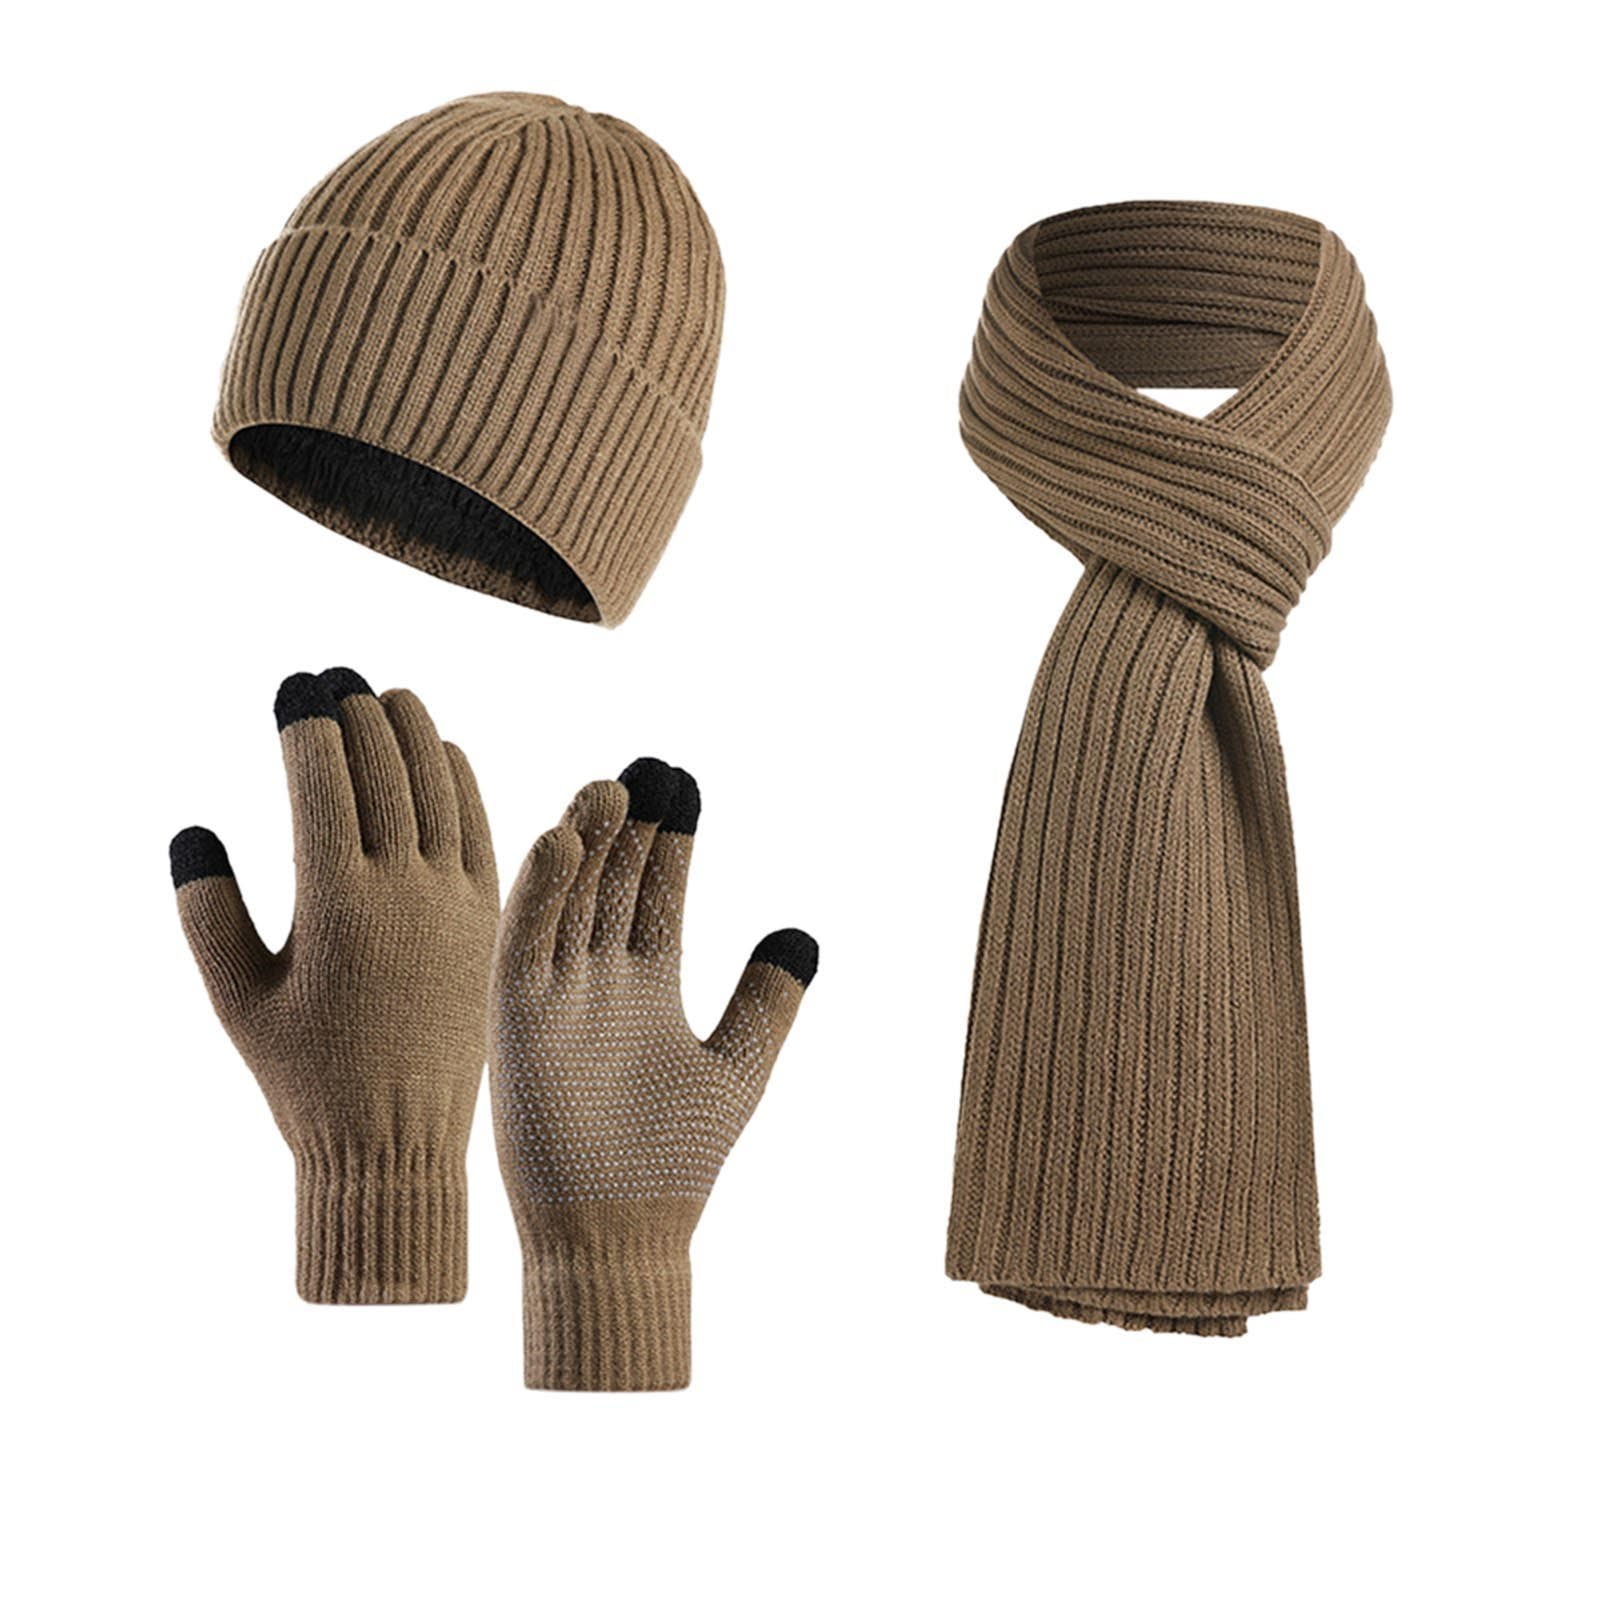 Baocc Accessories Women&Men Autumn and Winter Warm Wool